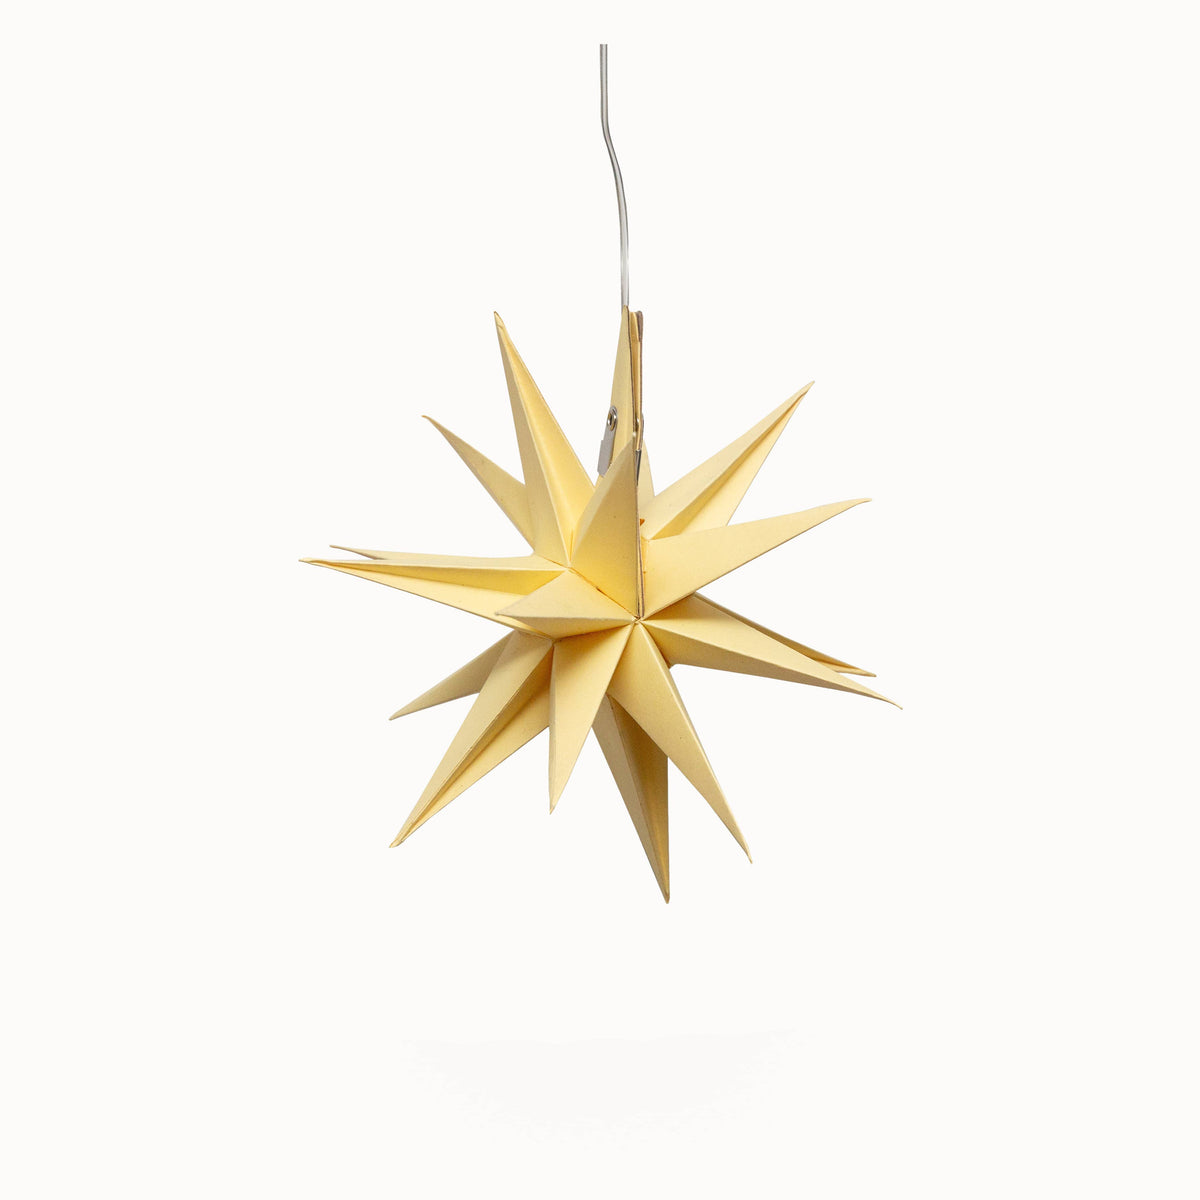 Moravian Mini Star ~ 7 inch, Yellow Paper Star Lantern Light